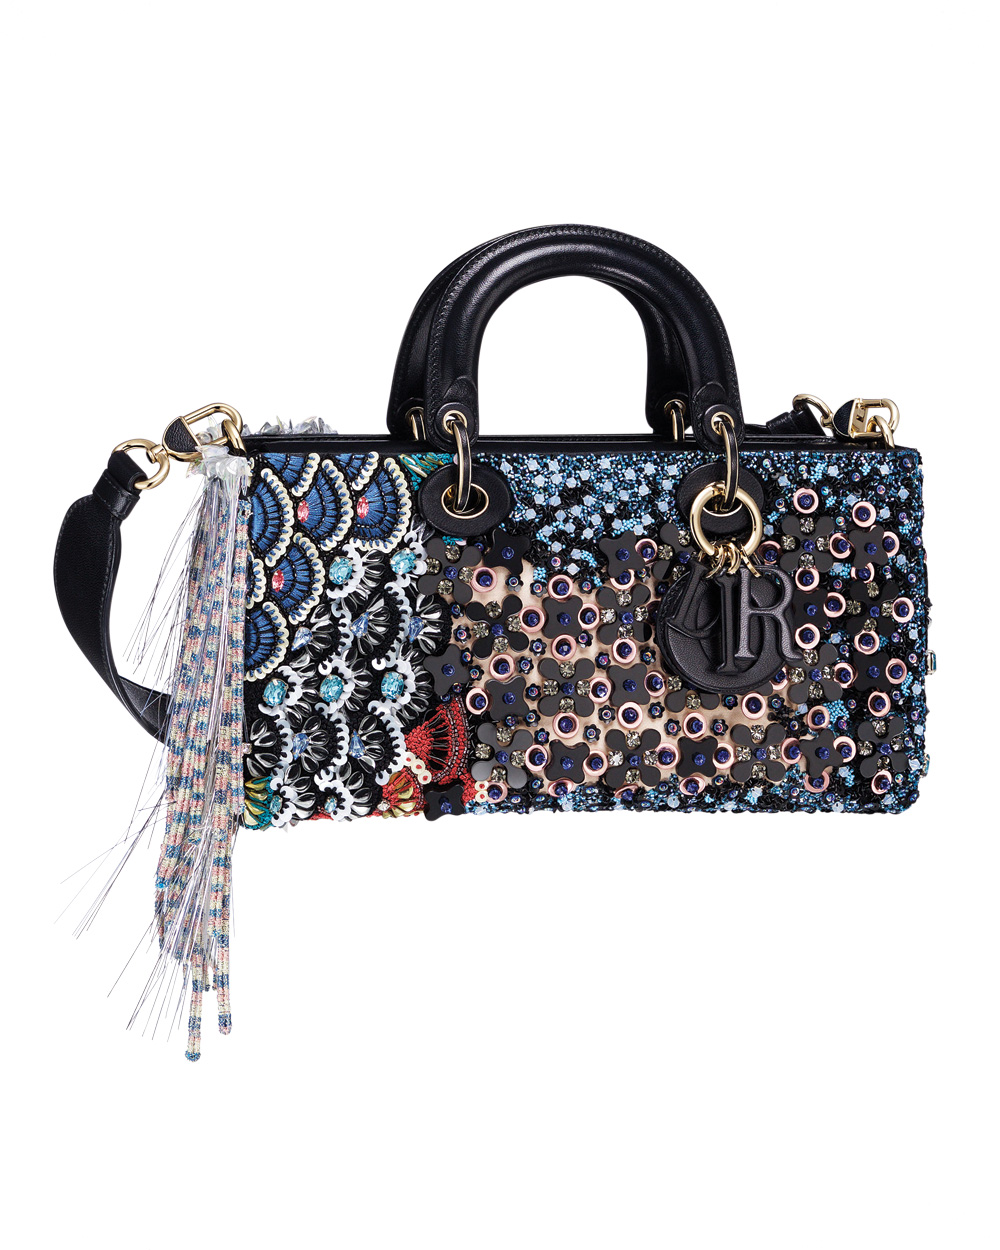 Christian Dior bag, $9400